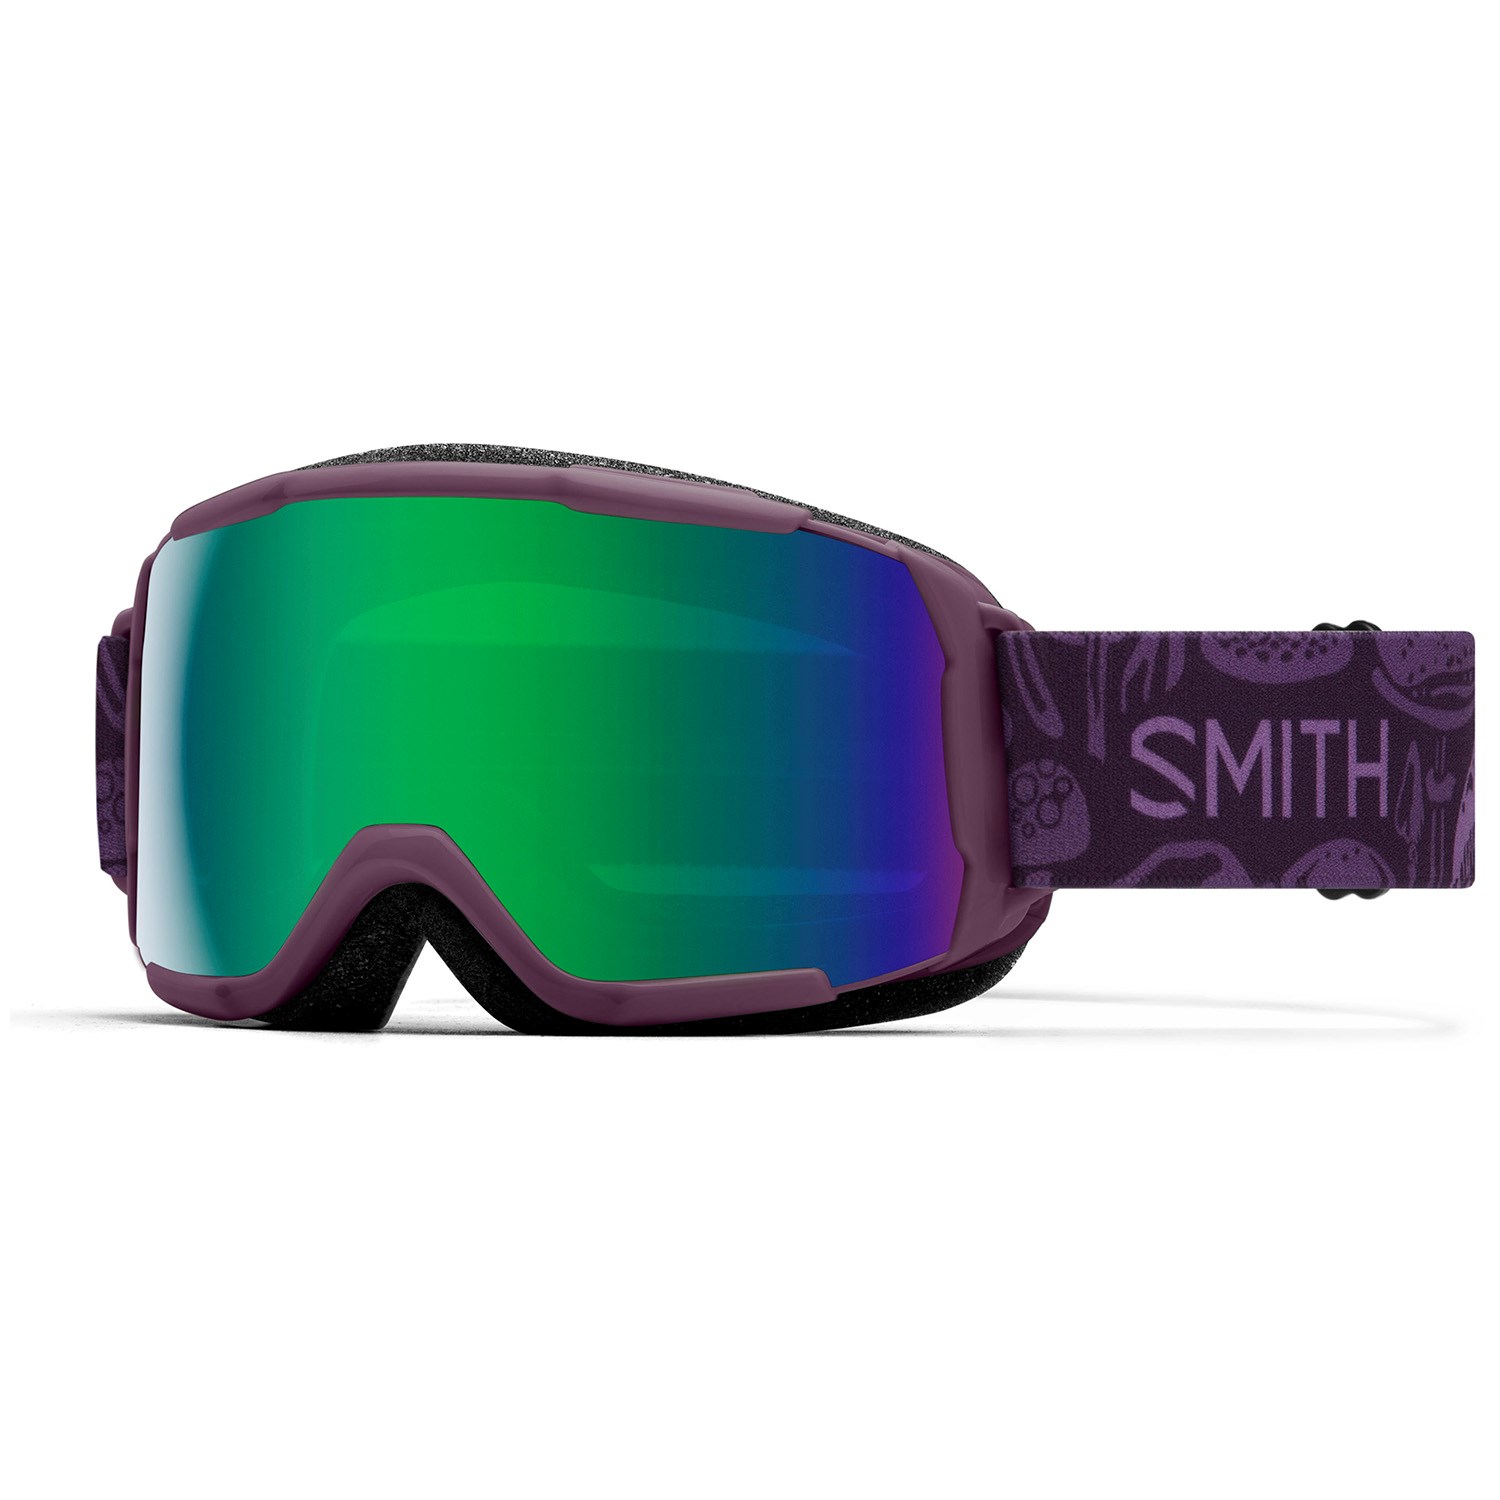 Smith Optics Grom Youth Snowboard Brand NEW! Many Colors Ski Goggles 